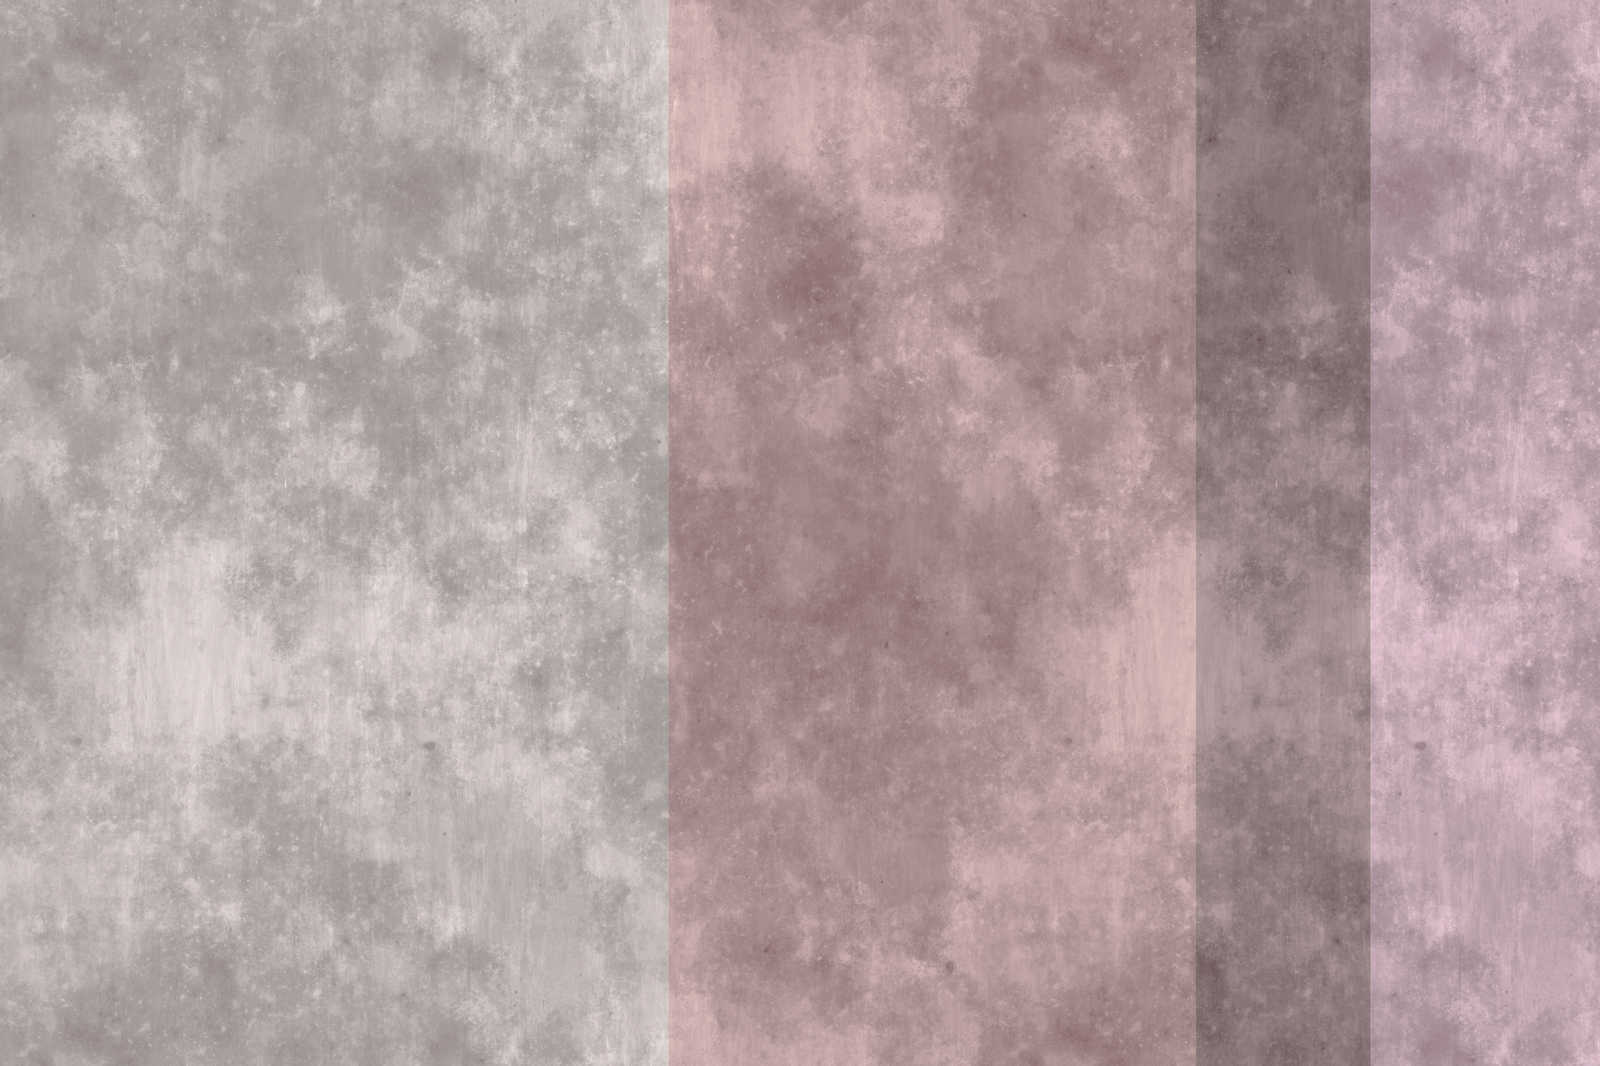             Betonoptik Leinwandbild mit Streifen | grau, rosa – 1,20 m x 0,80 m
        